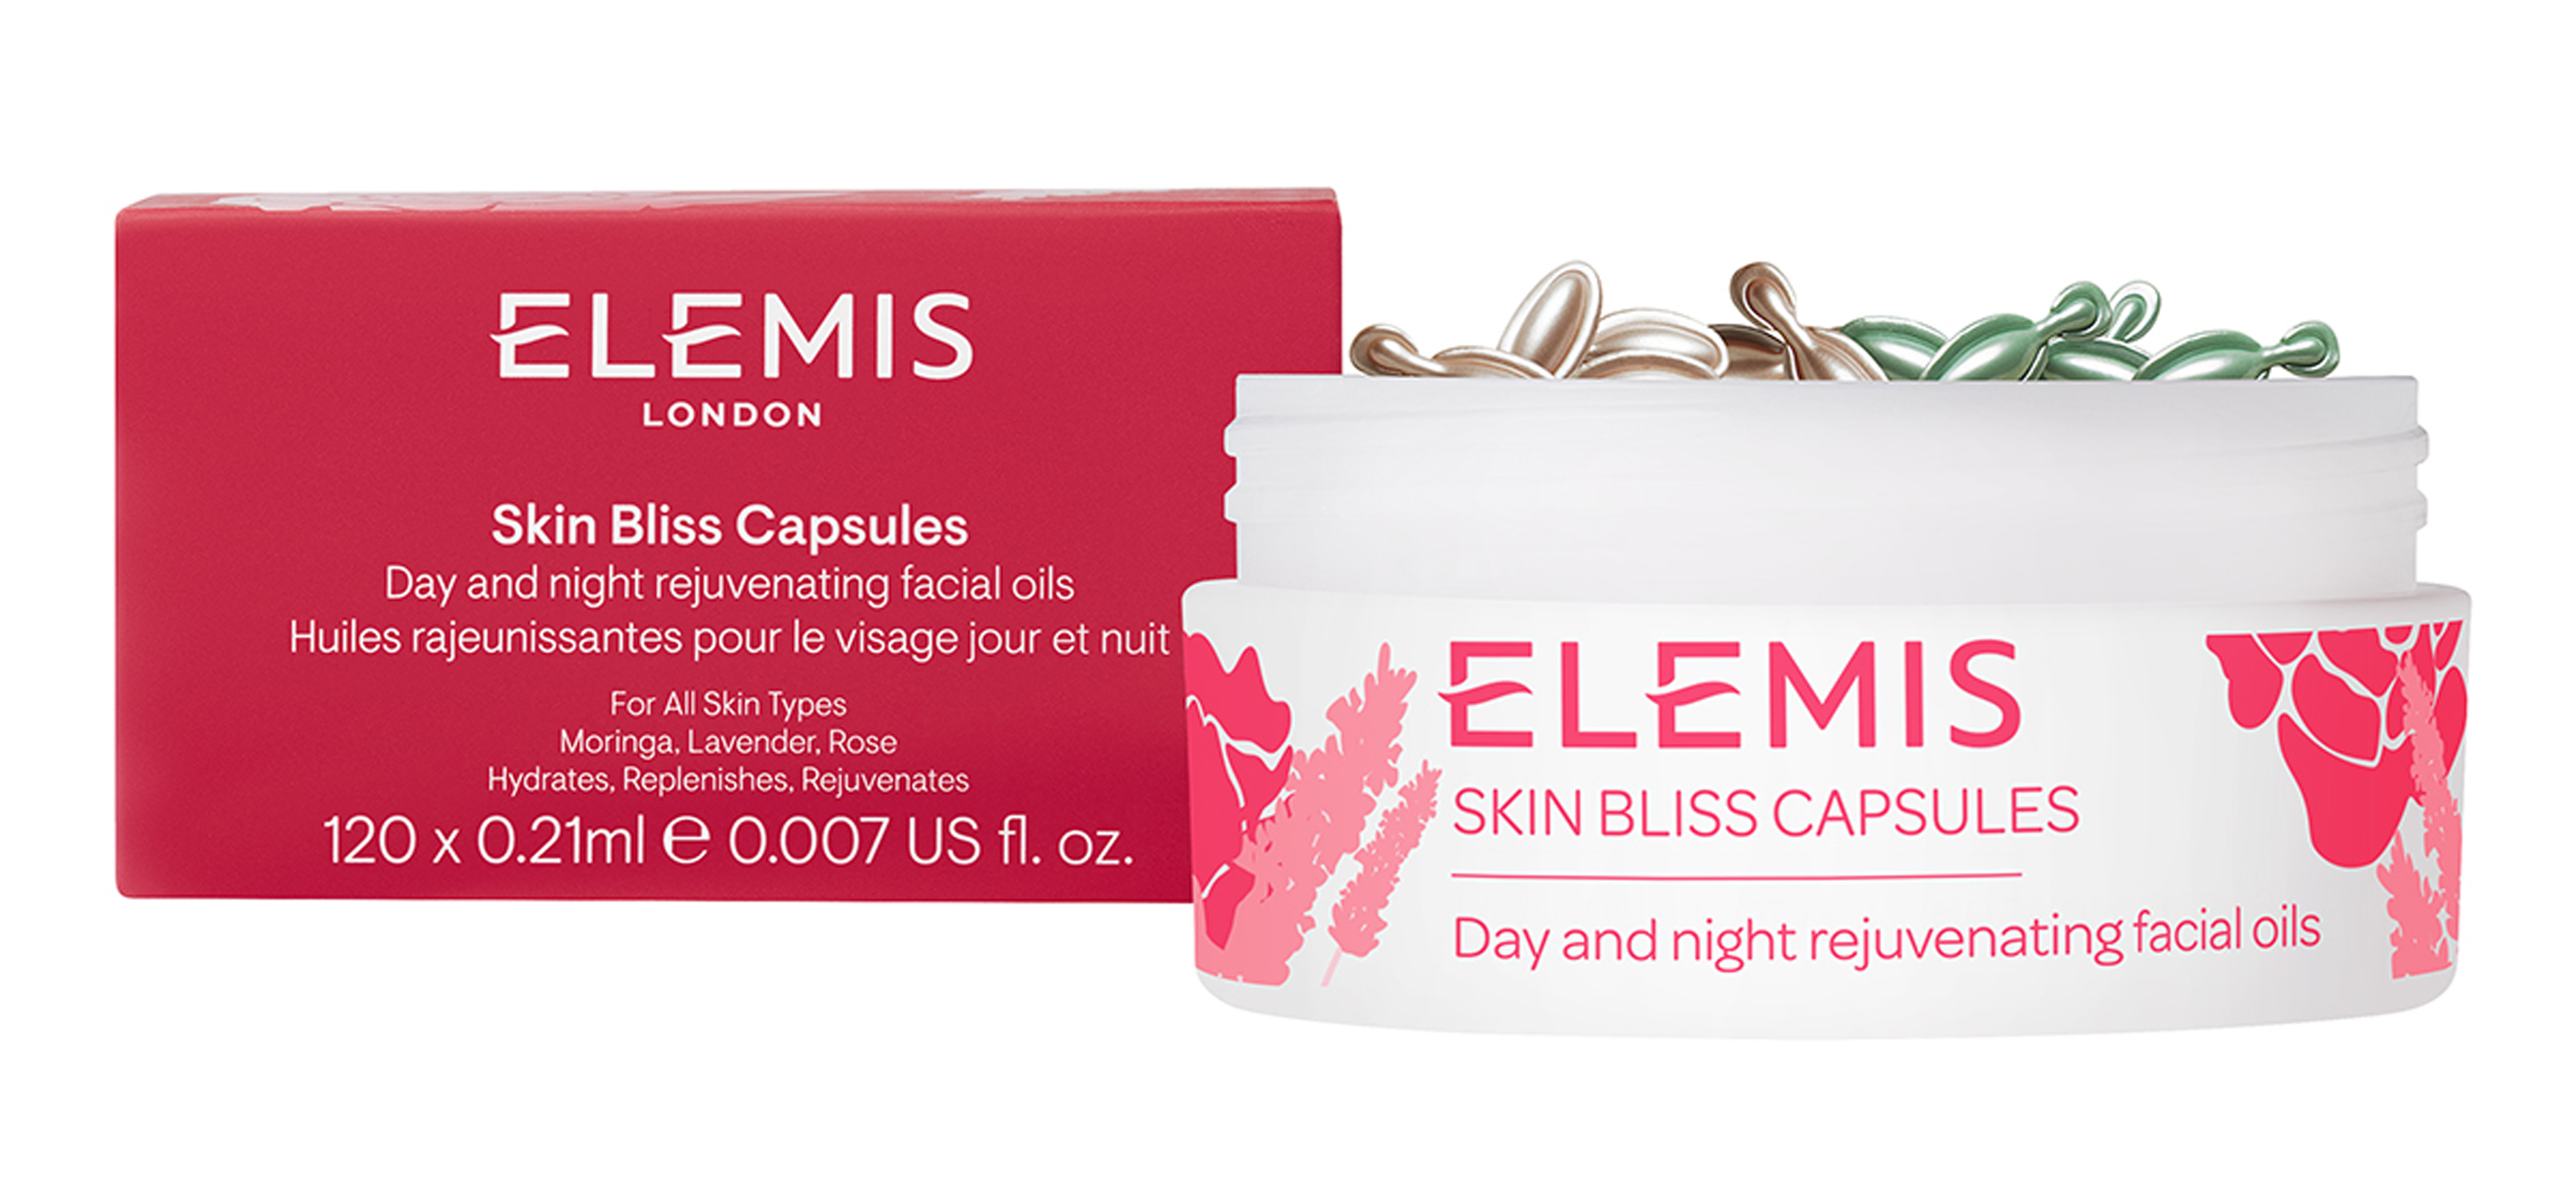 Elemis limited edition skin bliss capsules supersize